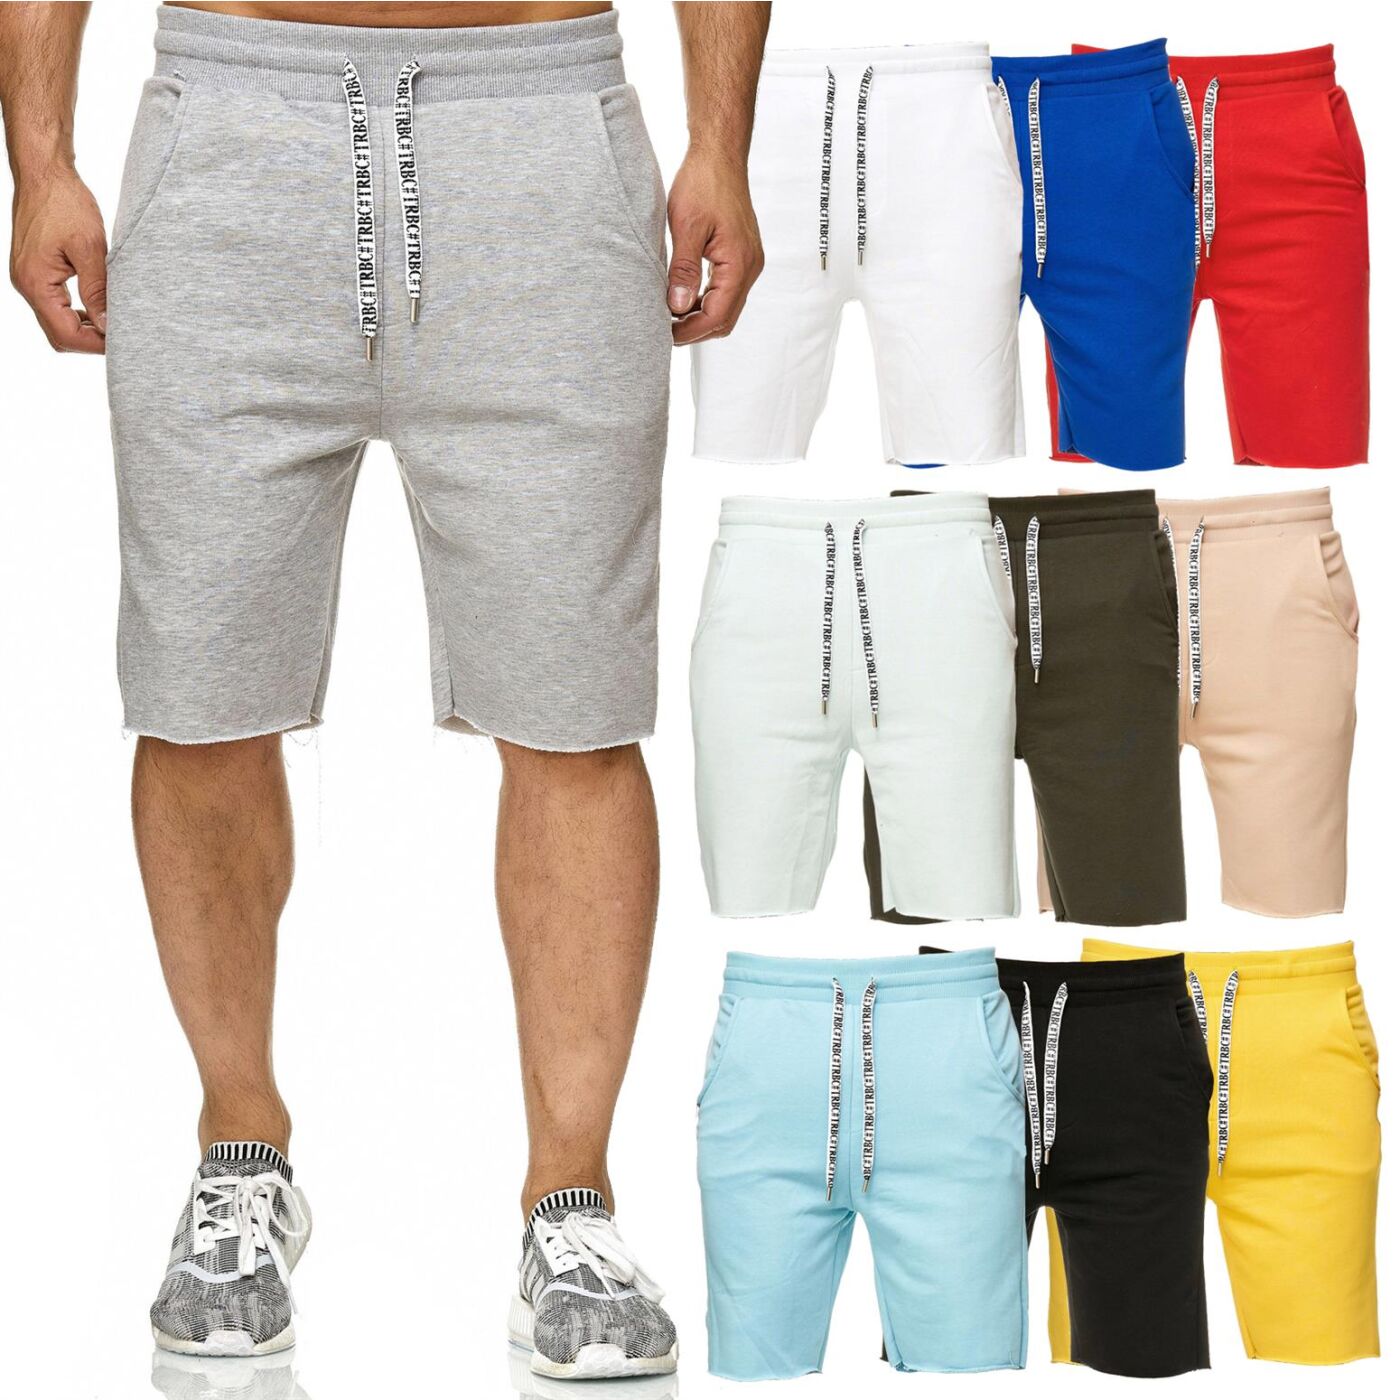 https://redbridgejeans.de/media/image/product/46961/lg/m4831_red-bridge-mens-shorts-sweatpants-jogging-pants-basic.jpg